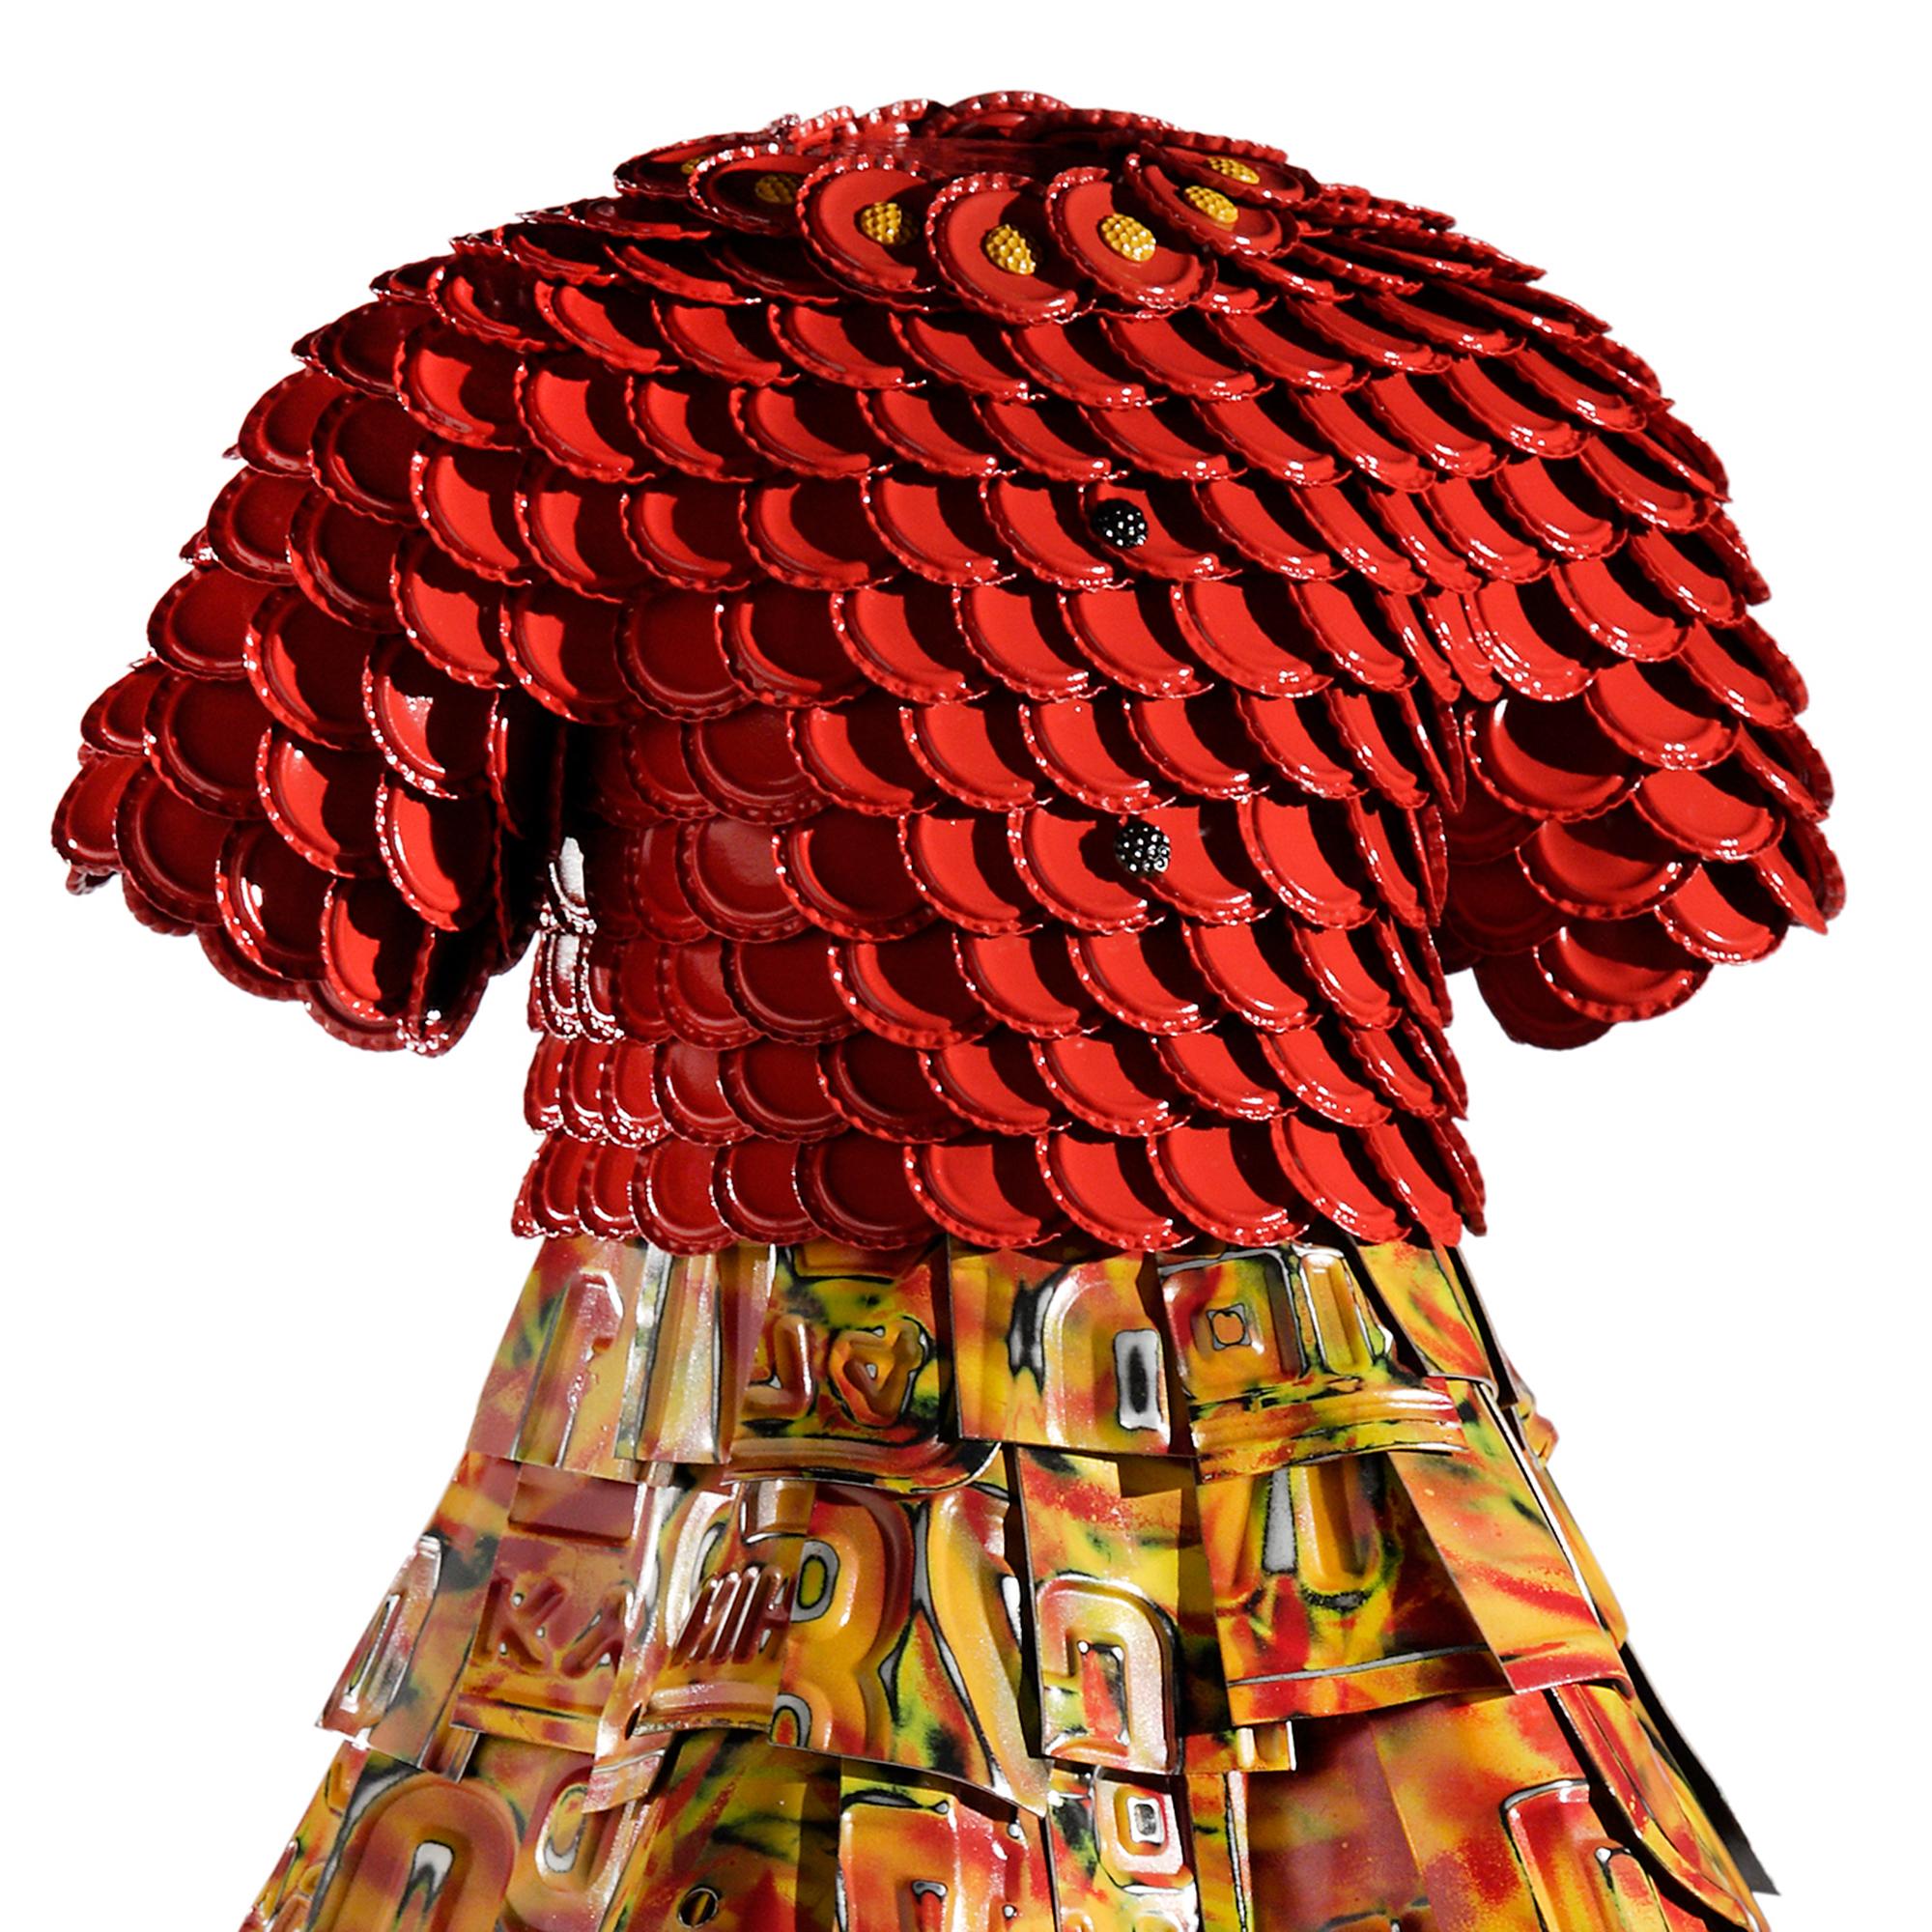 John Petrey Figurative Sculpture - 'Harper' Mixed Media, Found Object Sculpture of a Red and Orange Dress